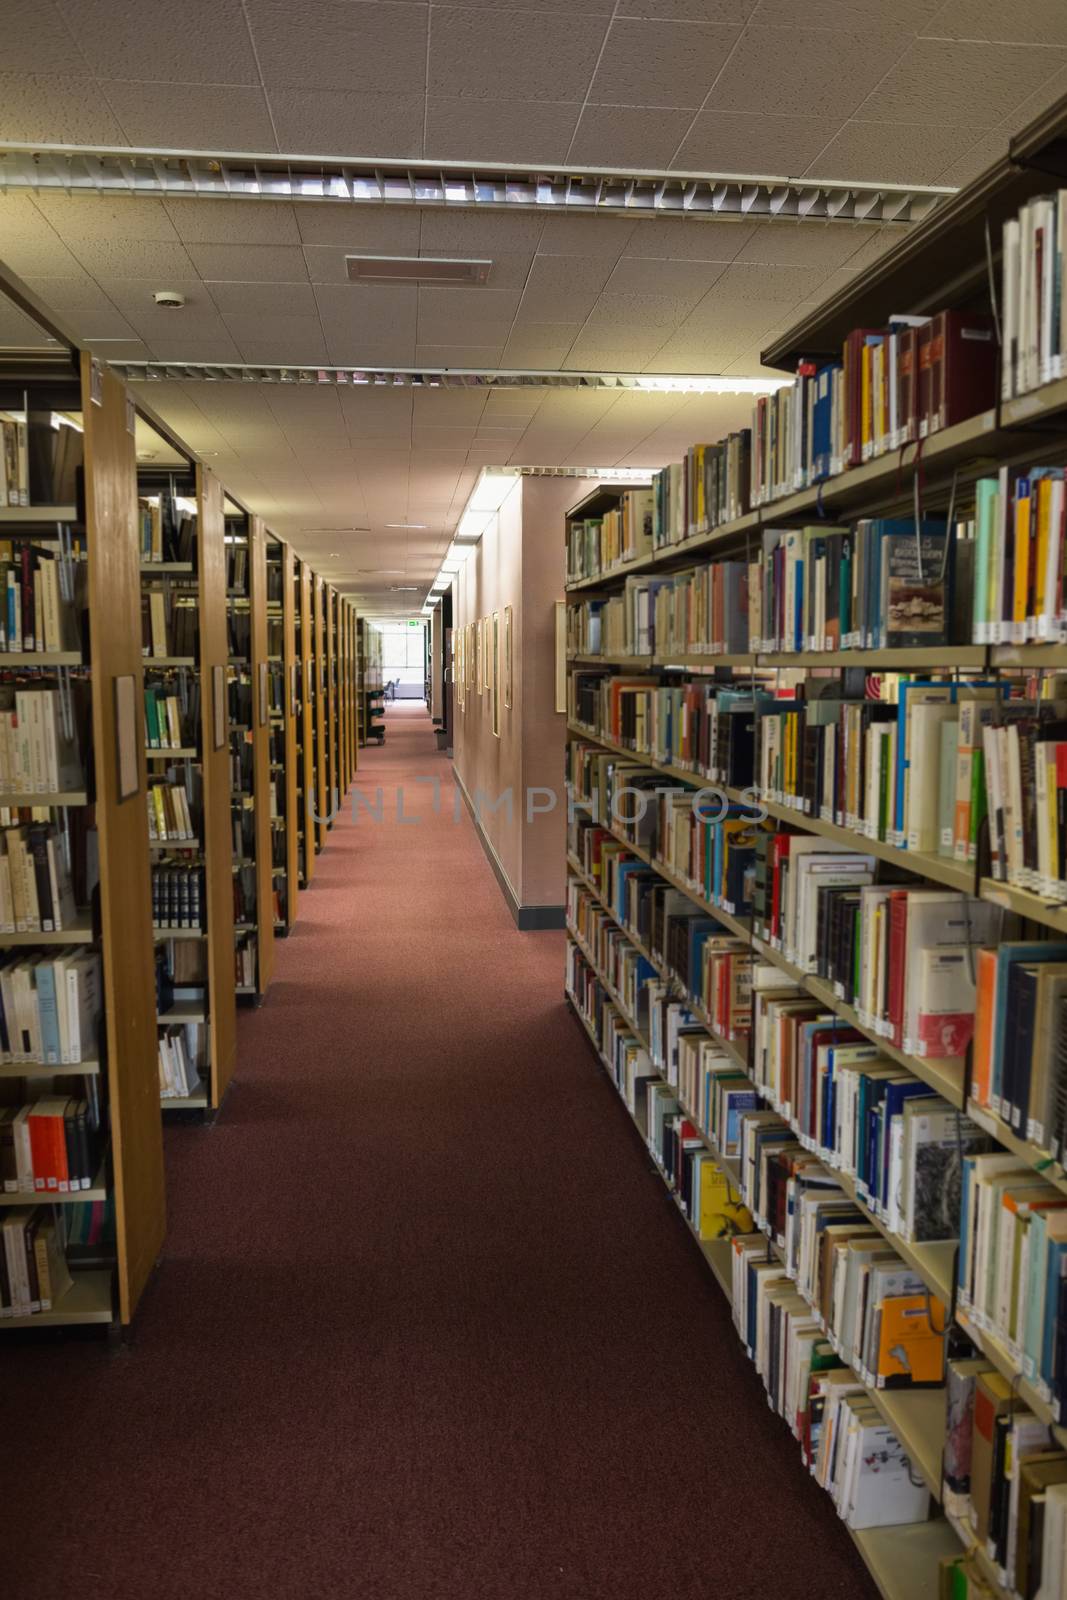 Volumes of books on bookshelf in library by Wavebreakmedia